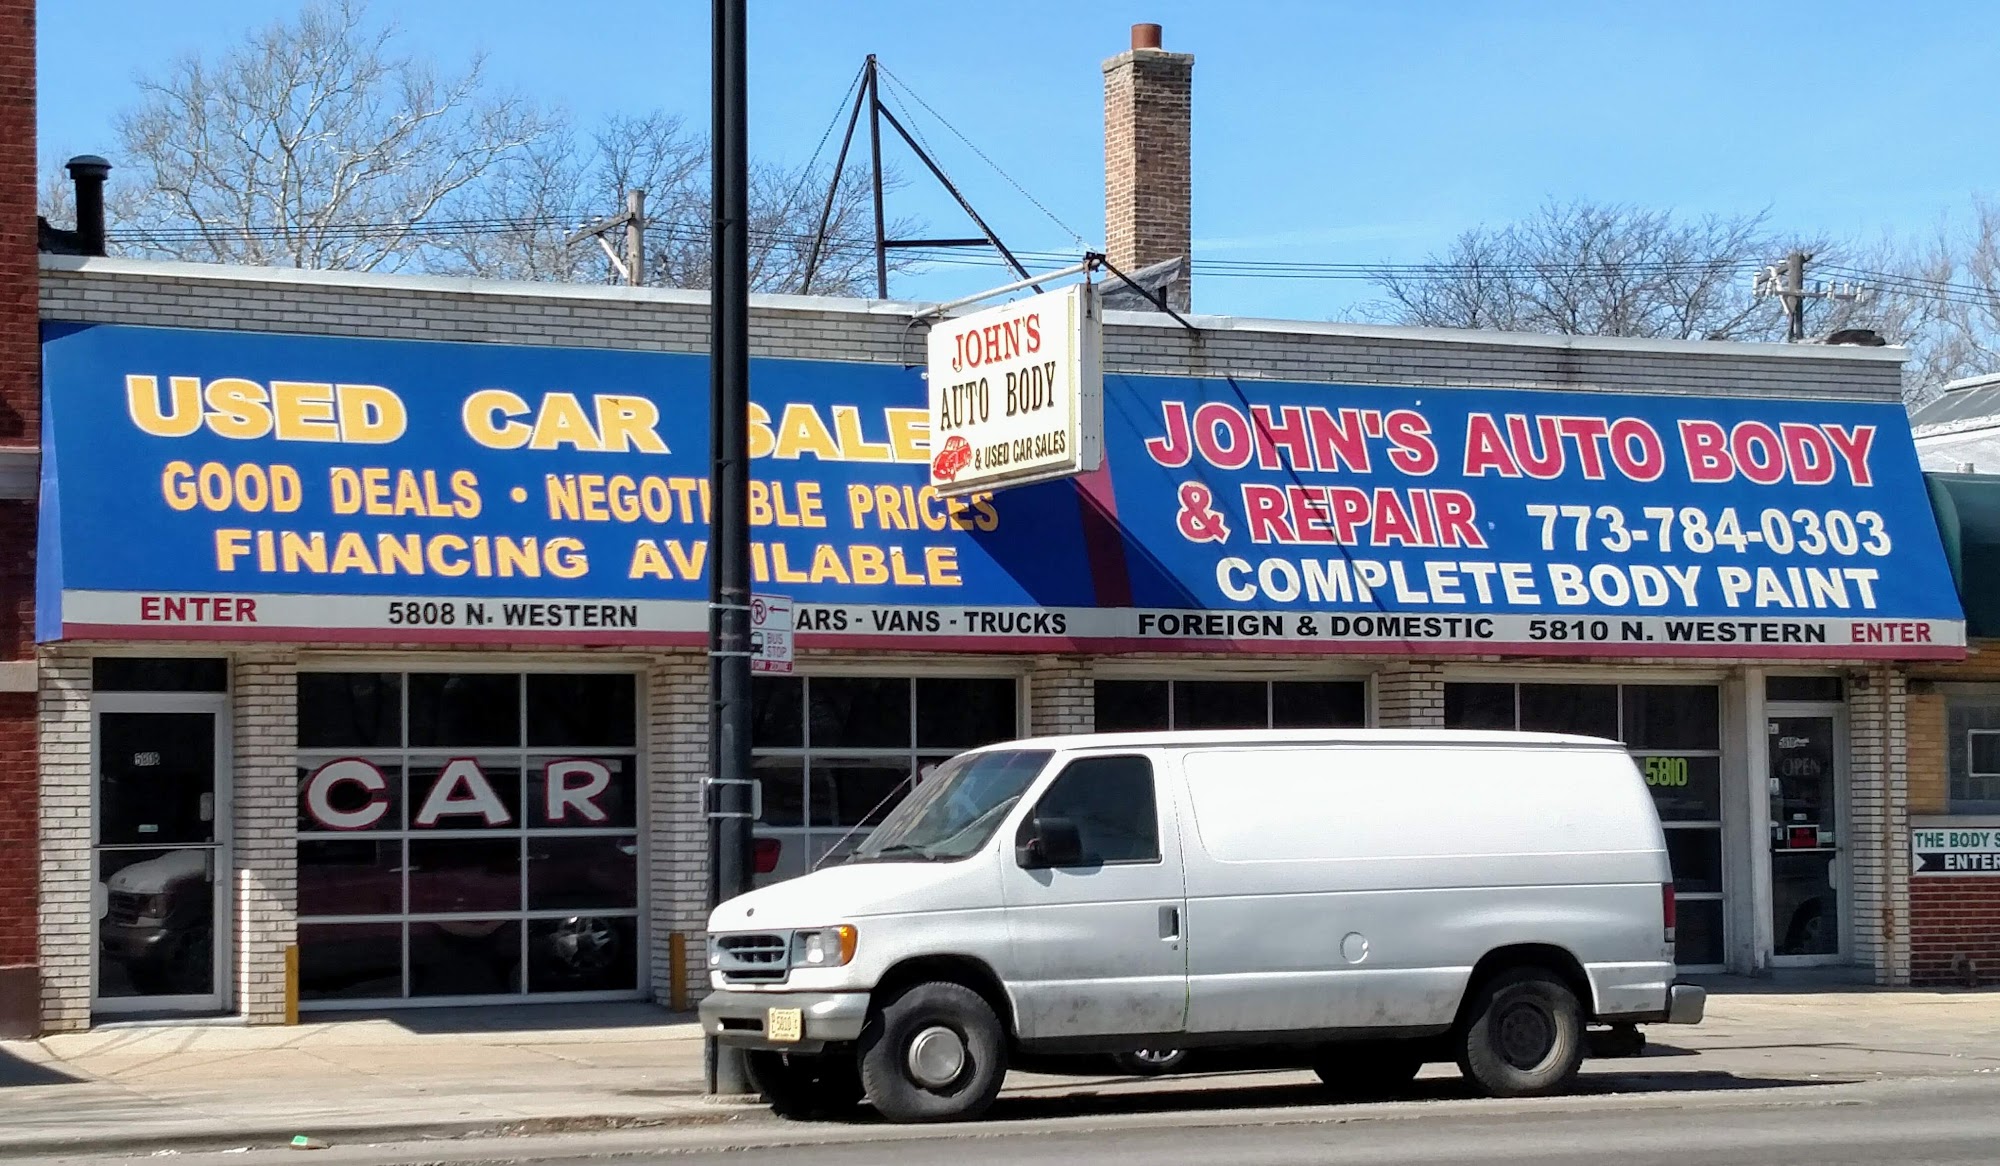 John's Auto Body & Repair